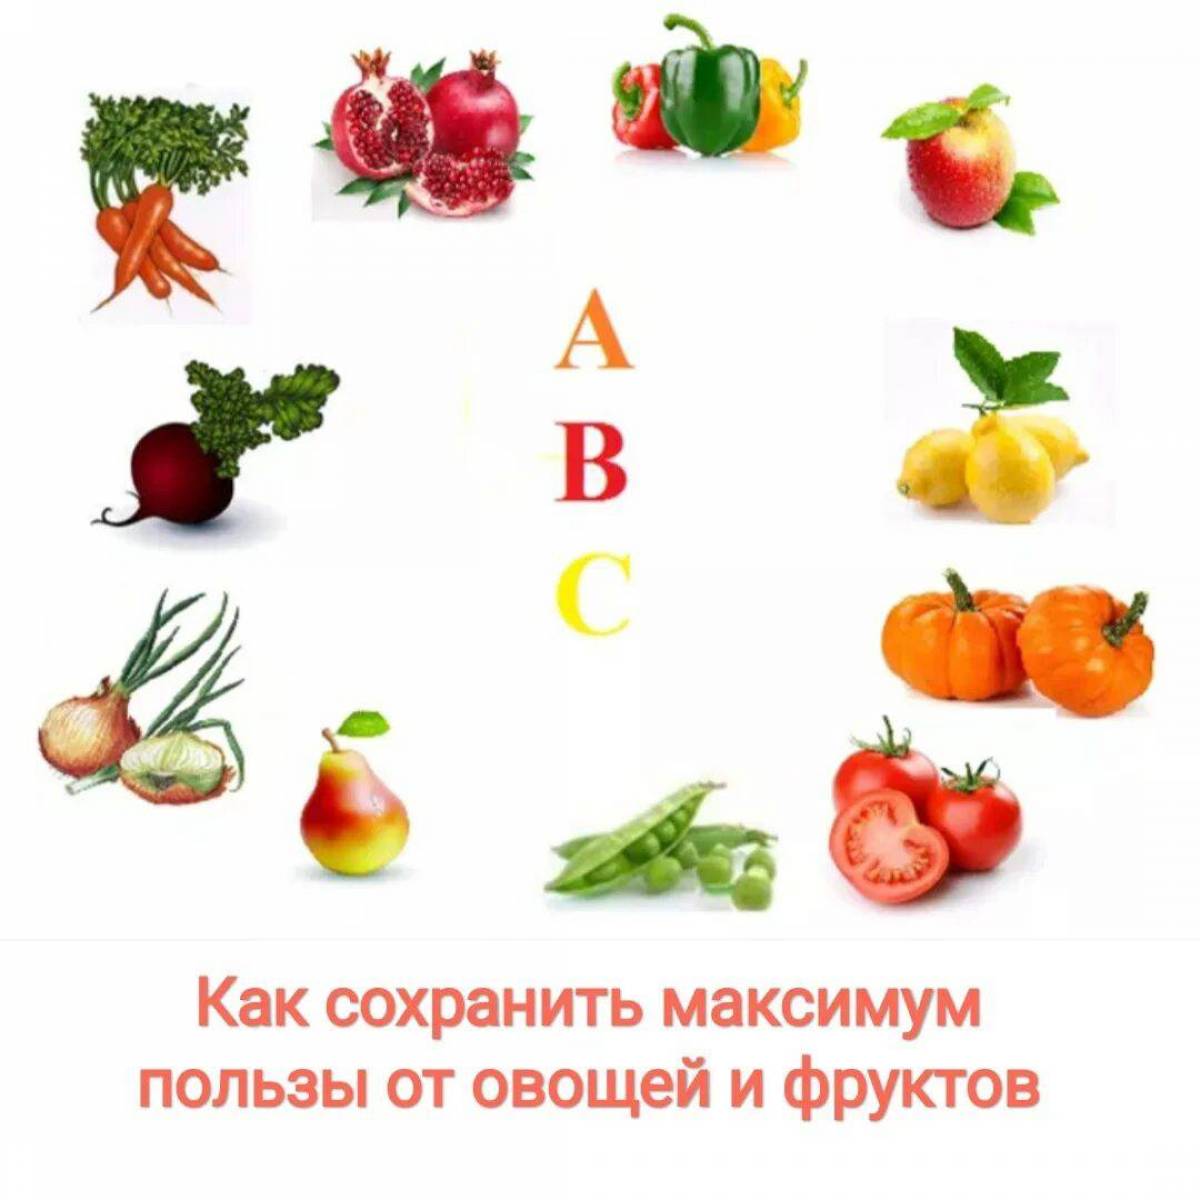 В каких овощах витамин б. Витамины АВС В овощах и фруктах. Витамины в овощах и фруктах для детей. Витамины содержащиеся в овощах и фруктах. Рисунок витамины в овощах и фруктах.